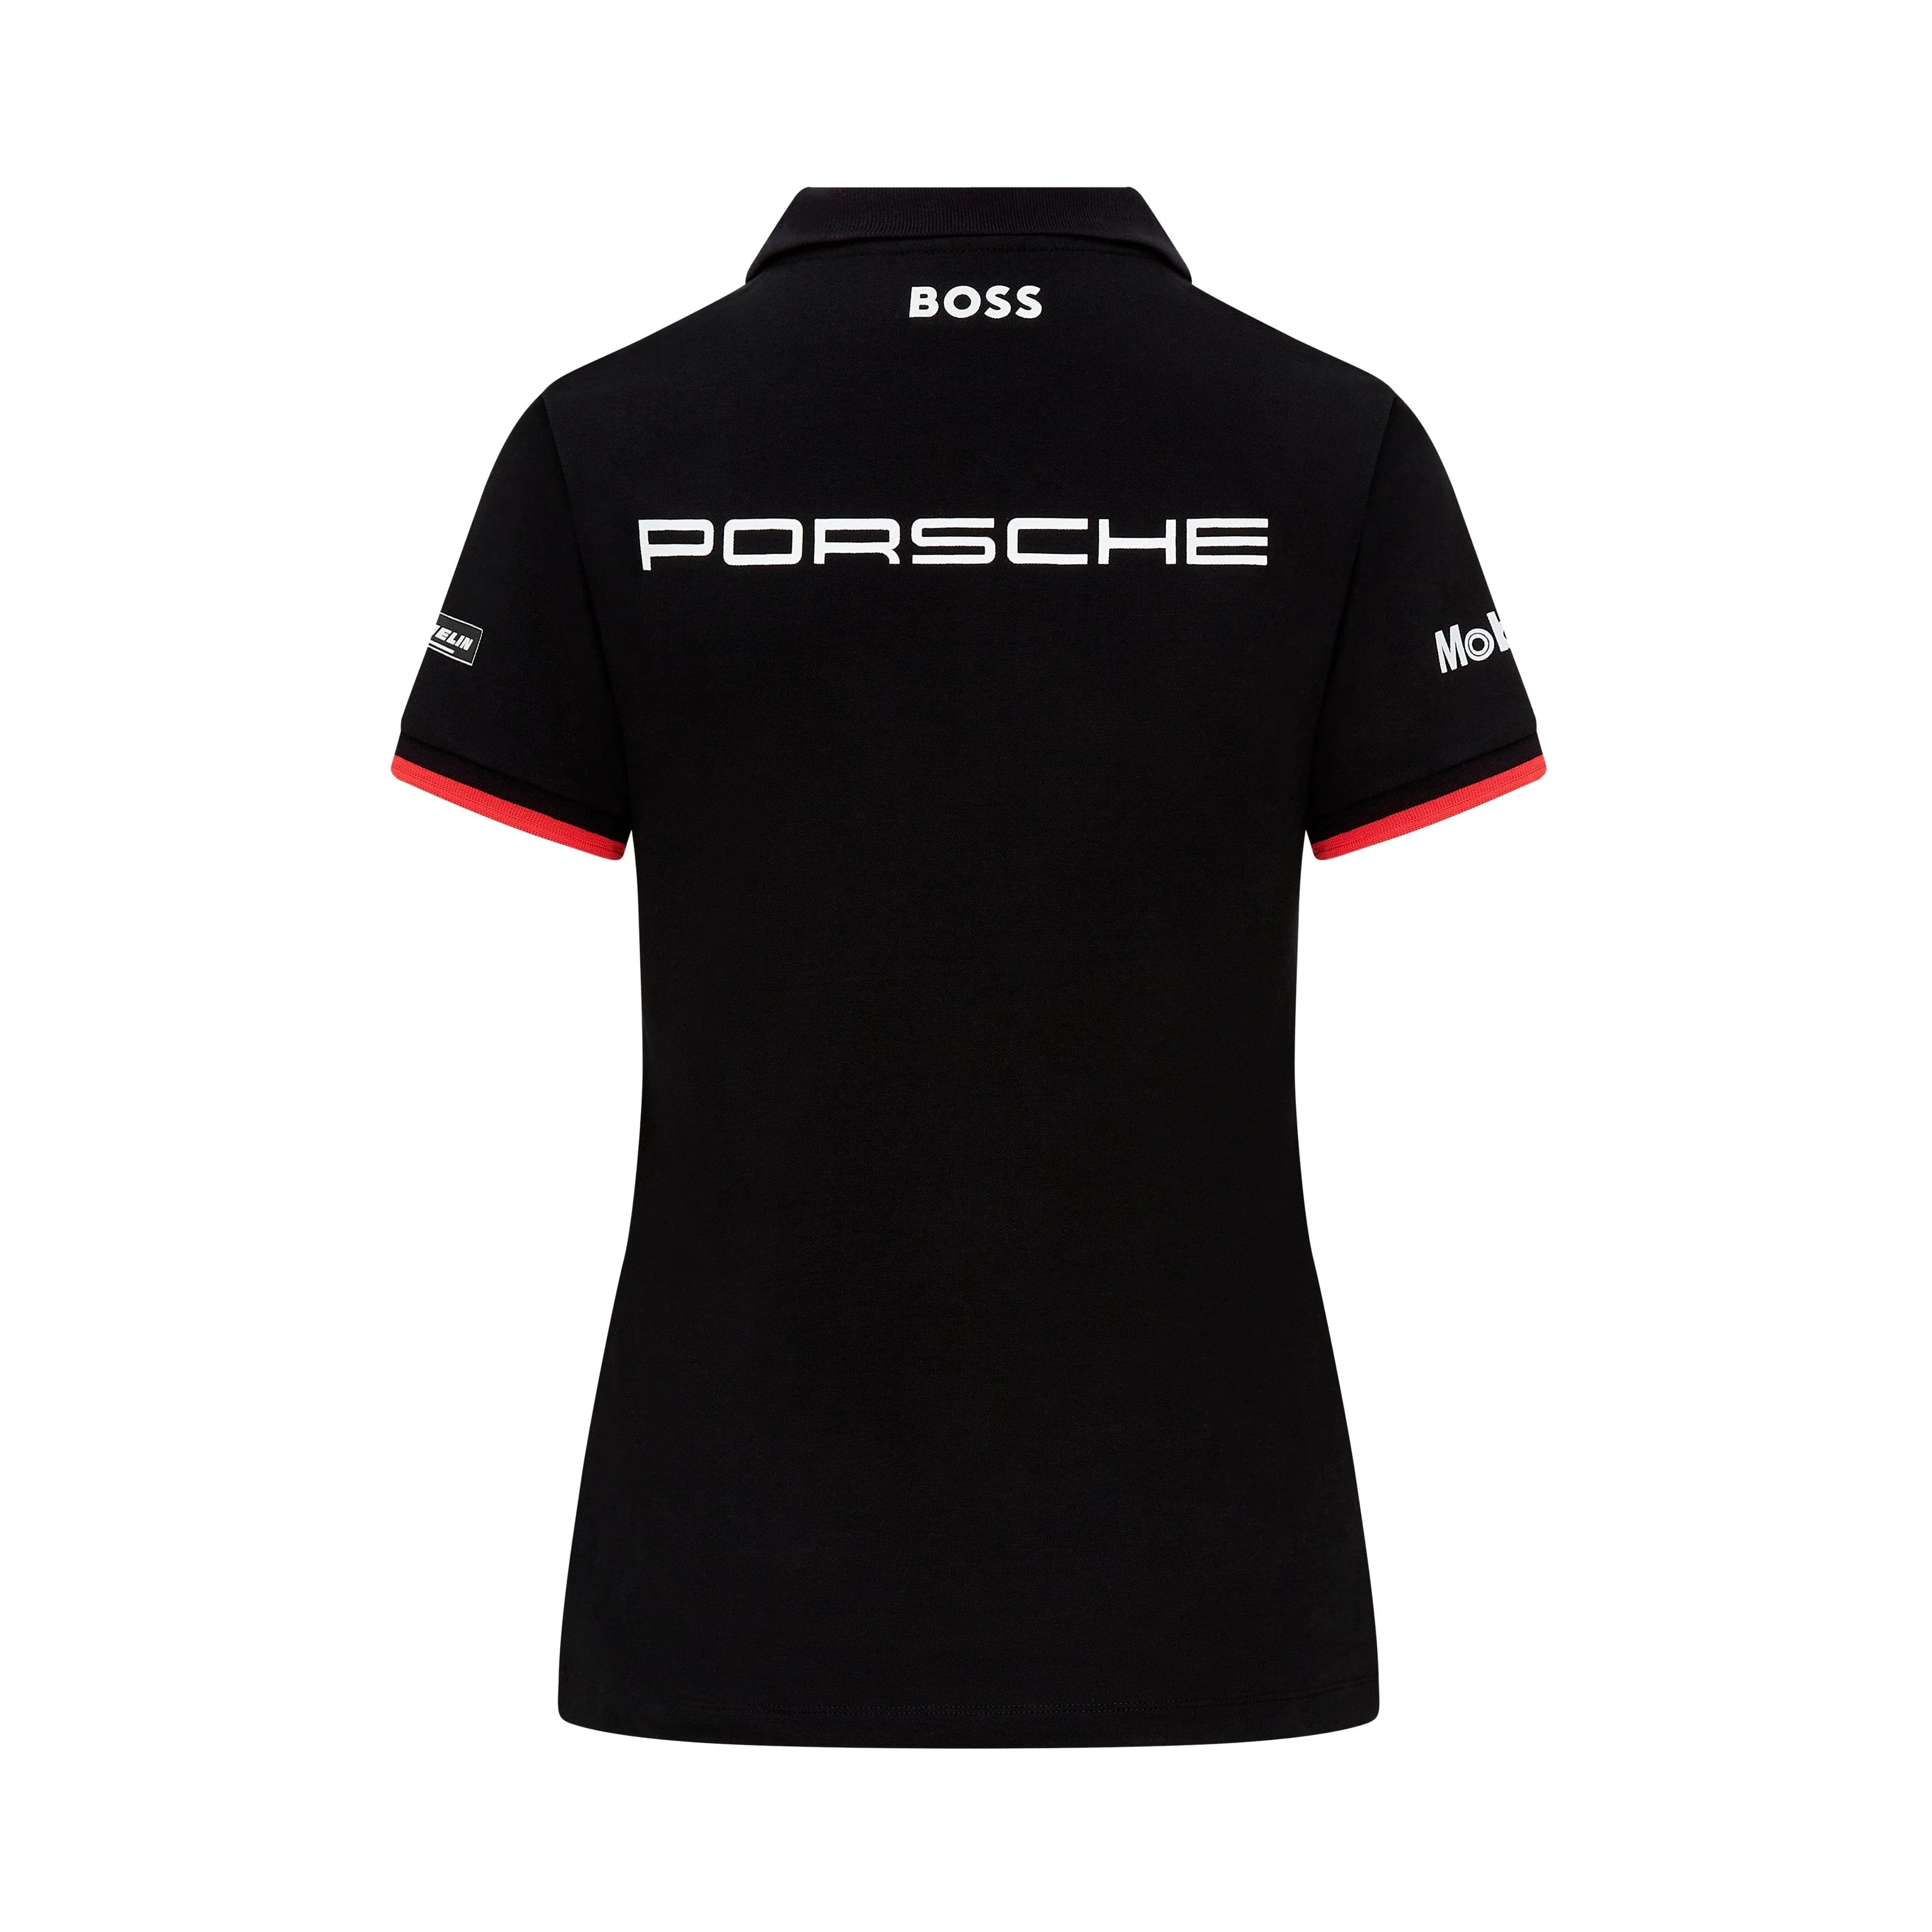 Porsche Motorsport Women's Team Polo Black